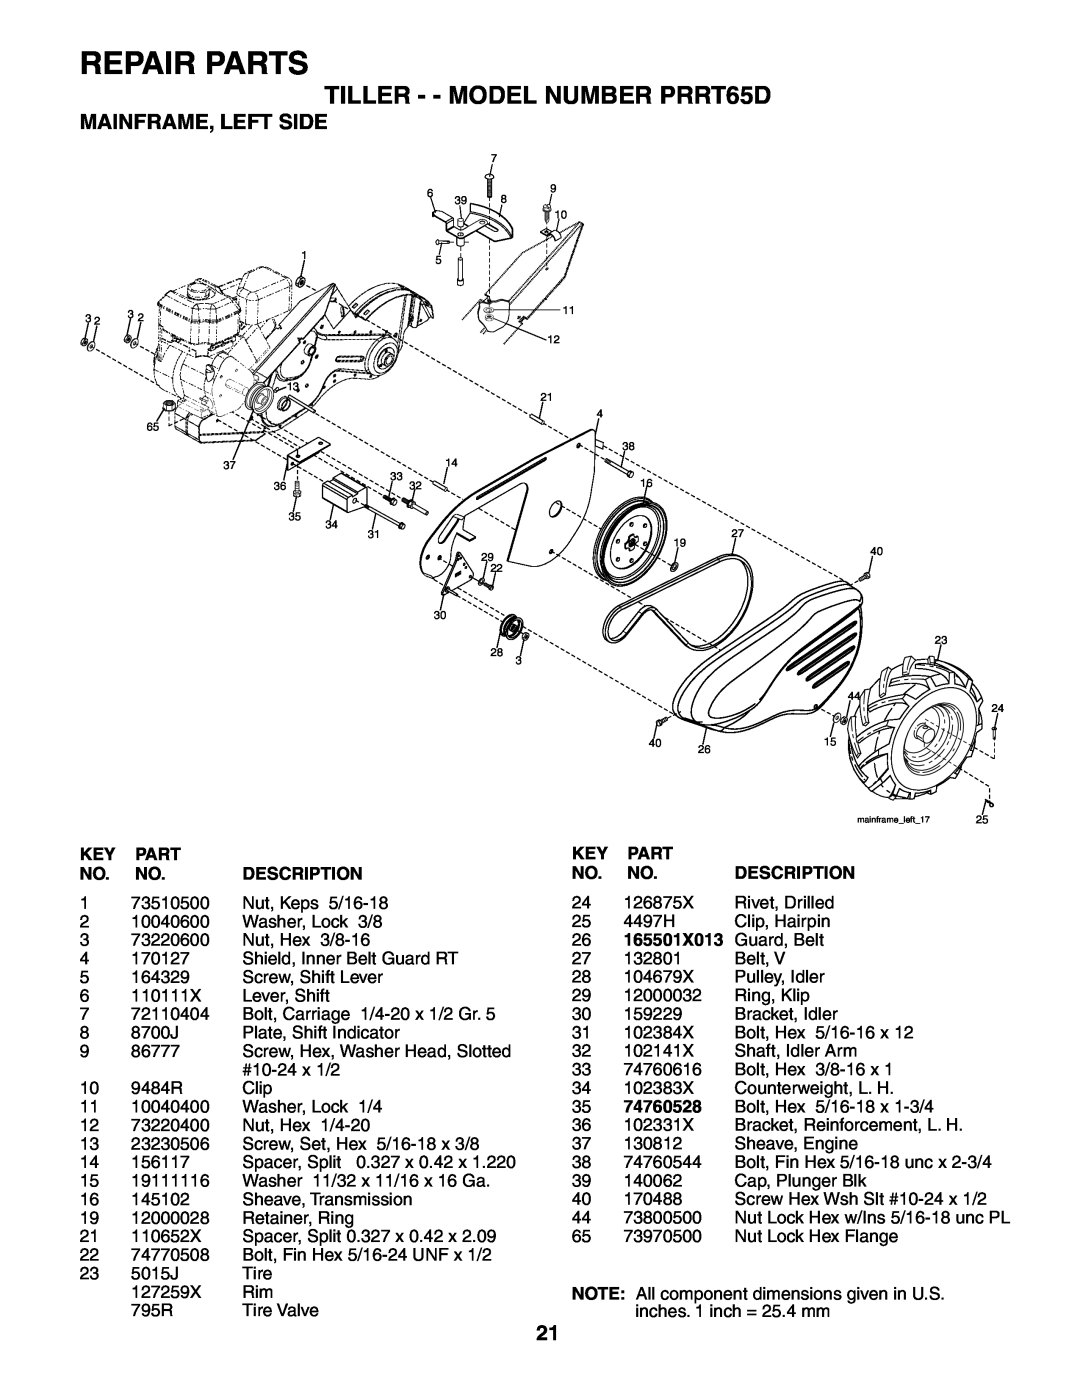 Poulan Mainframe, Left Side, 165501X013, 74760528, Repair Parts, TILLER - - MODEL NUMBER PRRT65D, Description 